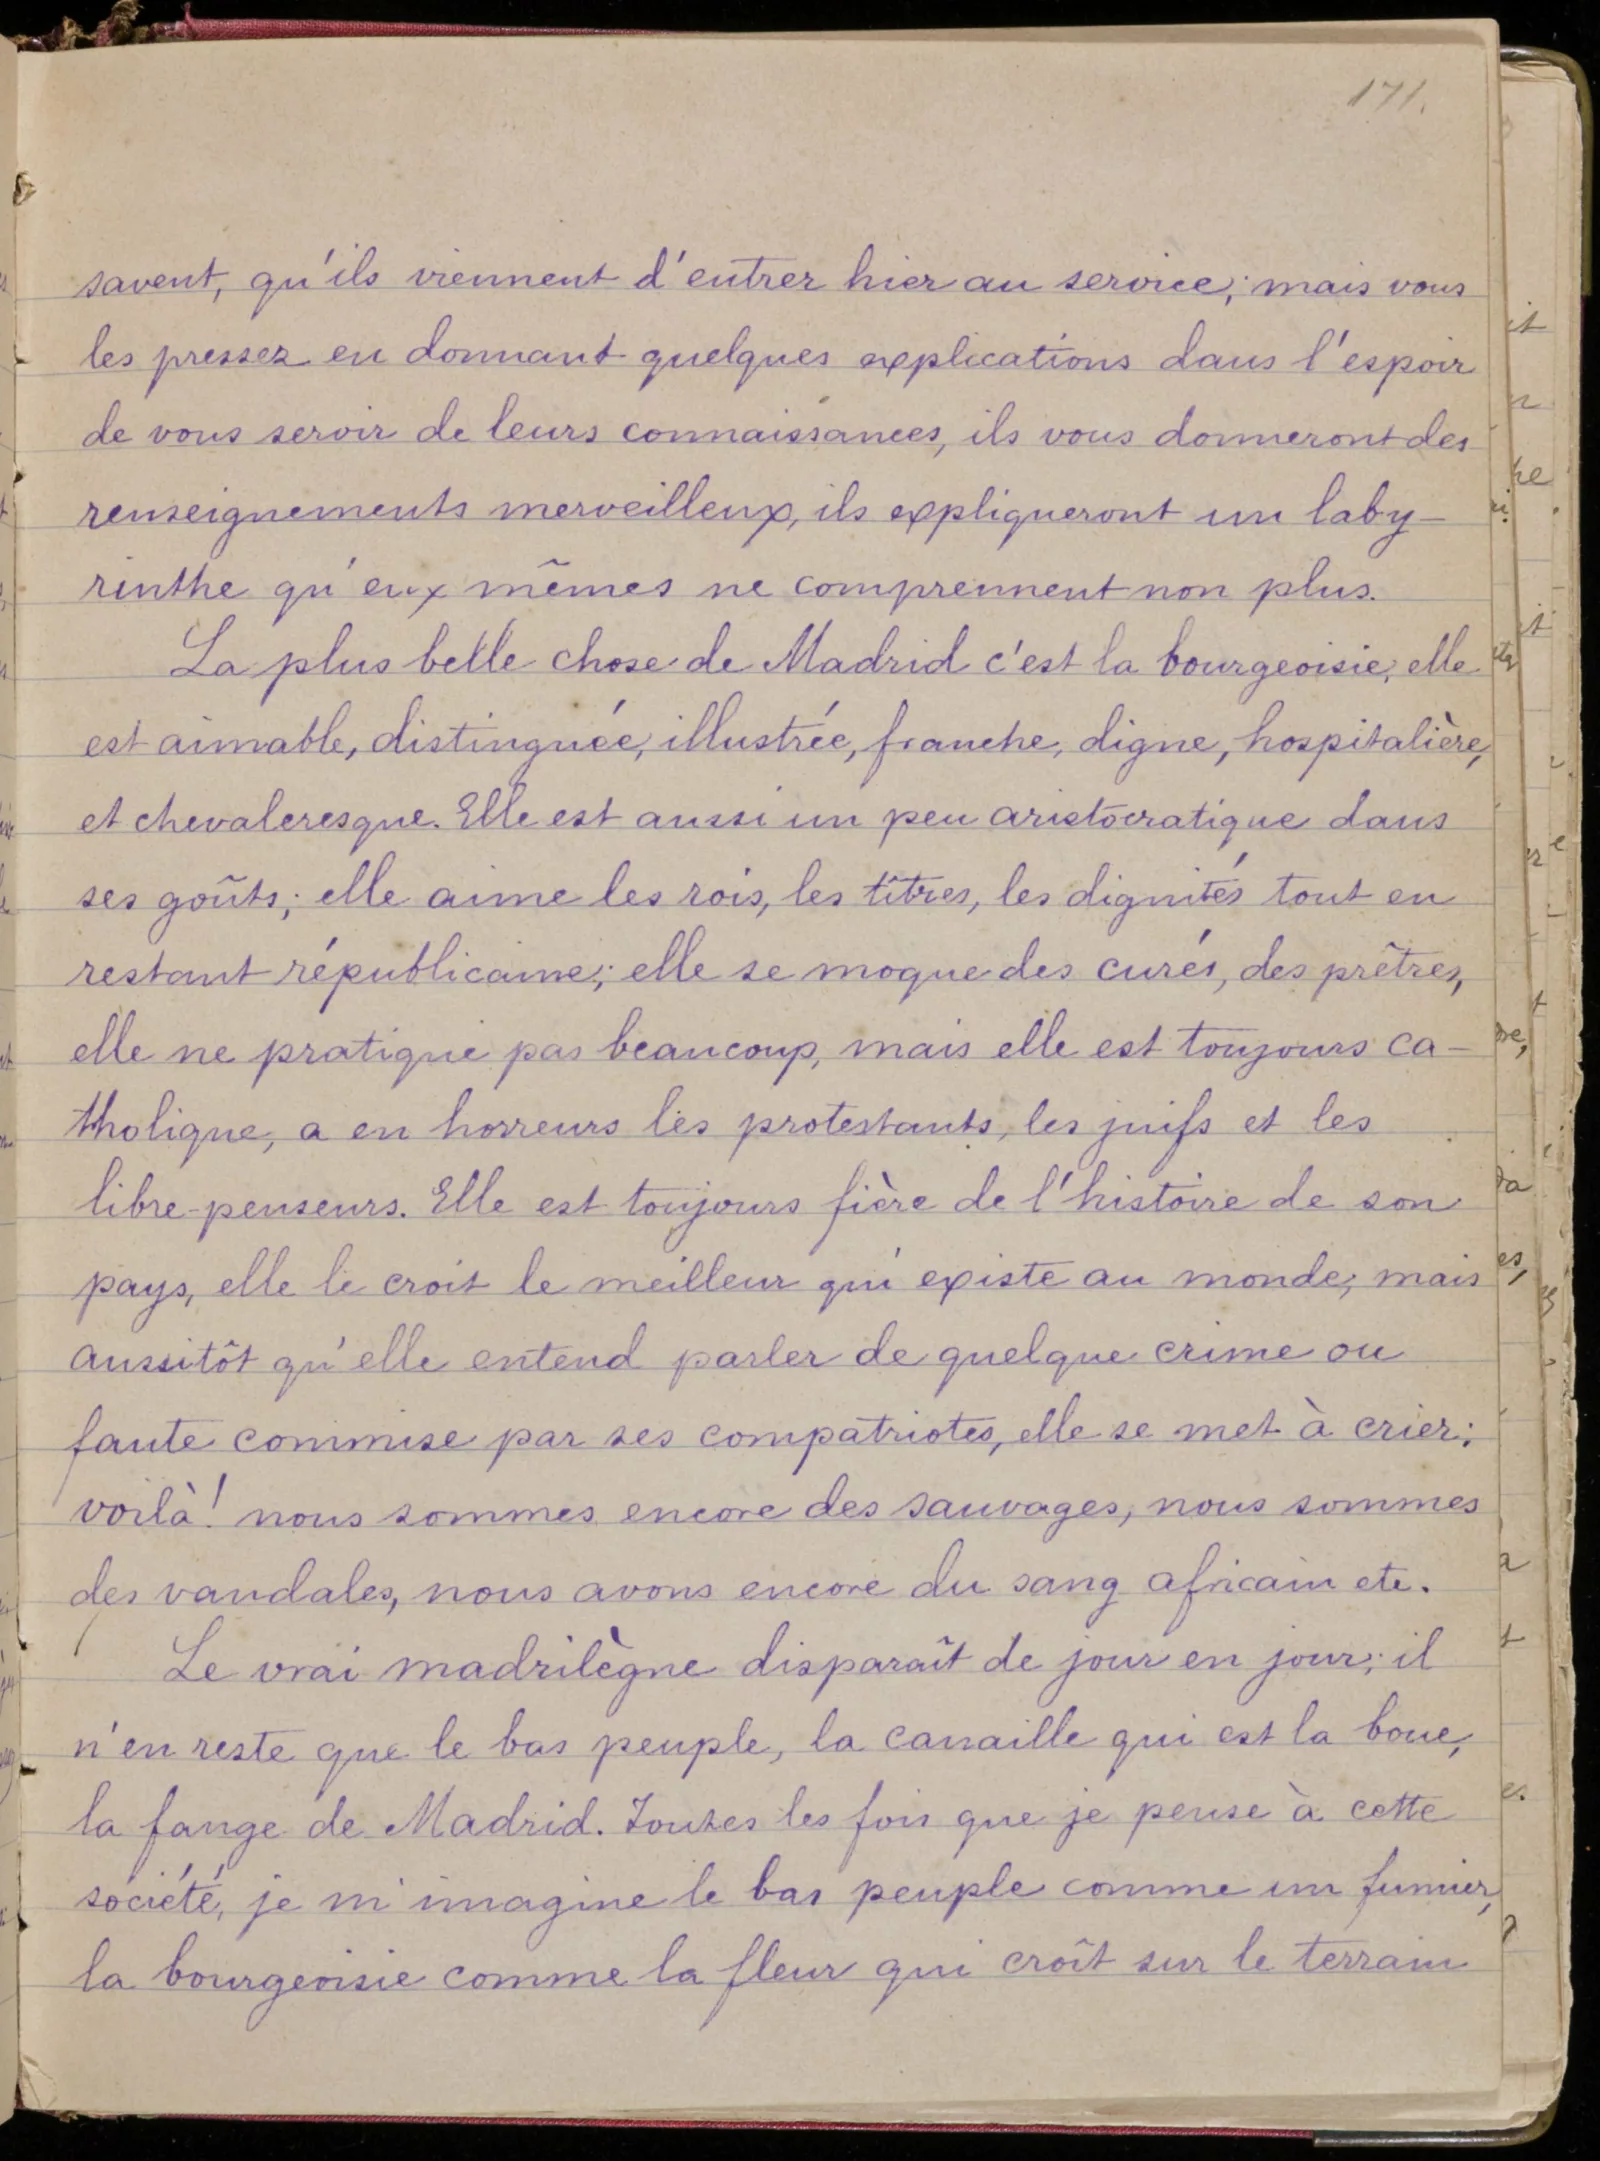 Page 171 of Clínica Médica, written by Rizal in script.